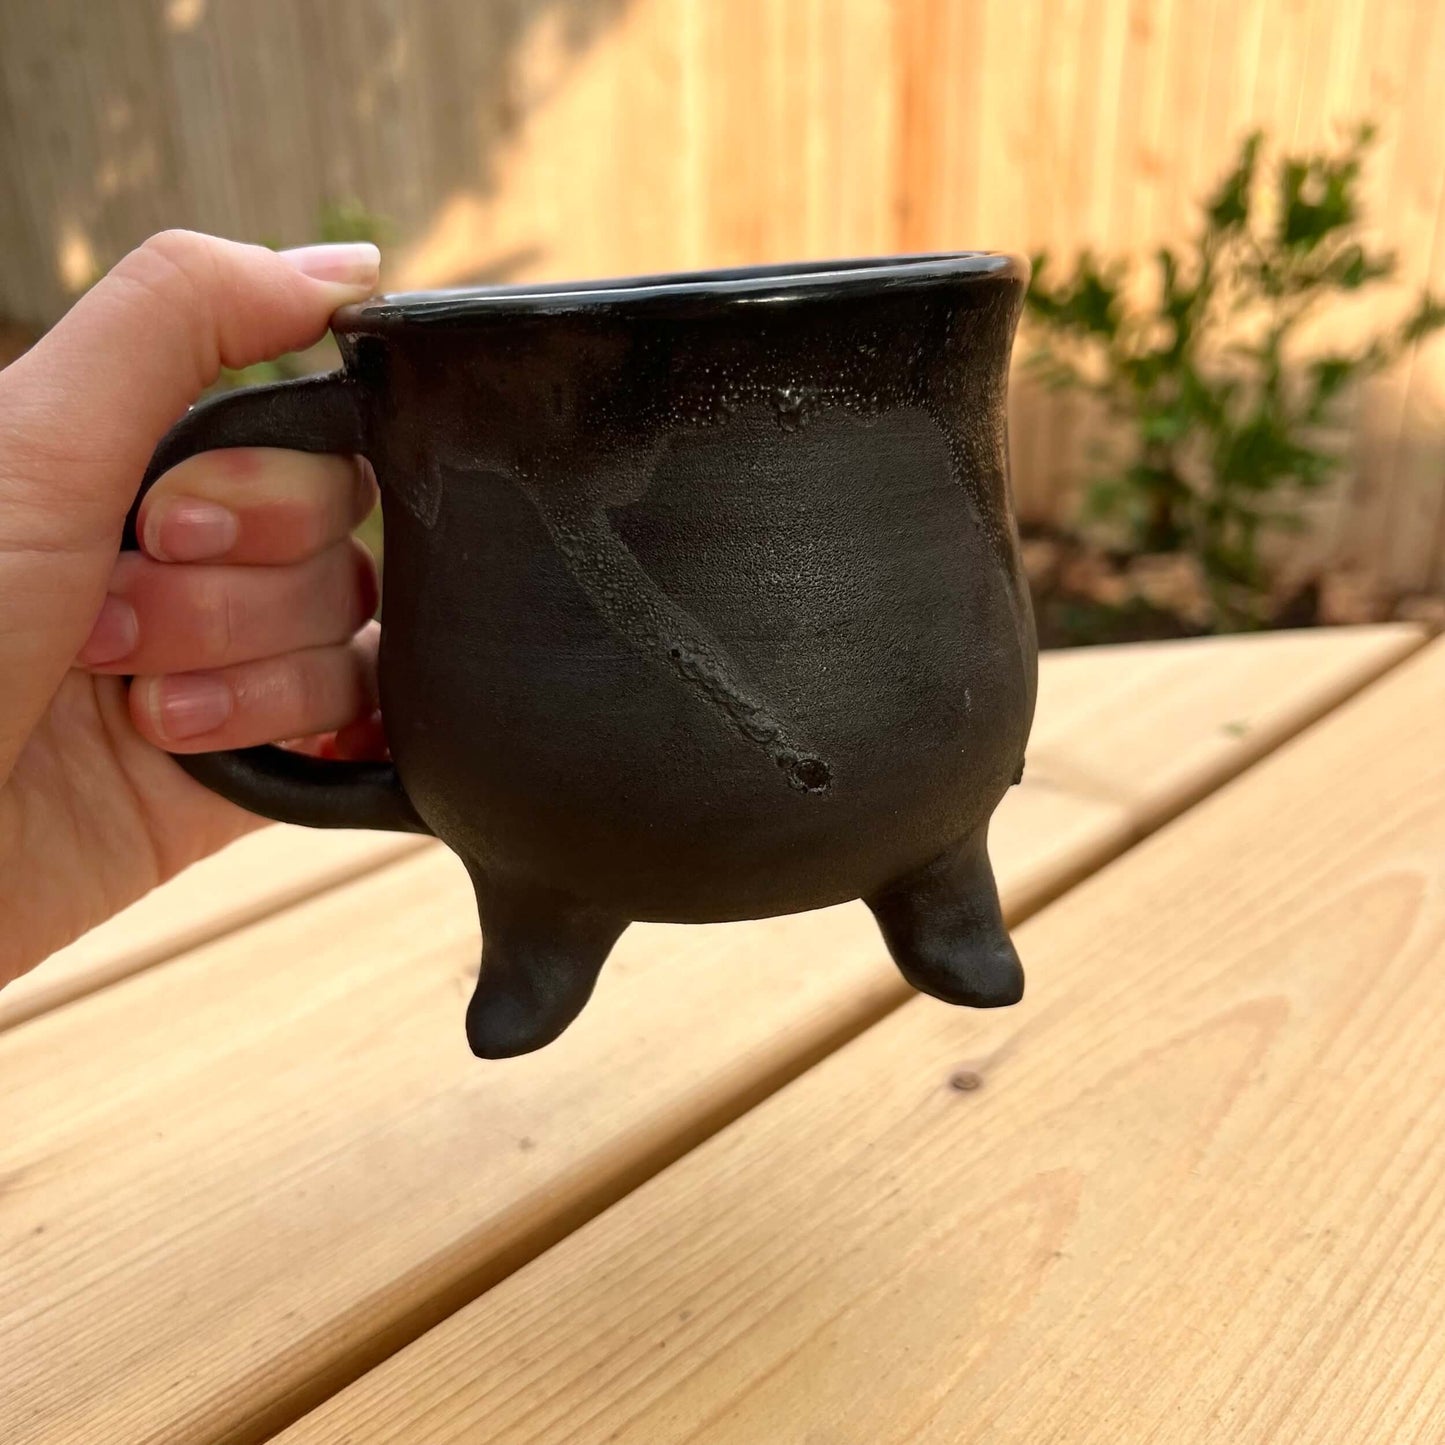 Halloween ceramic cauldron mug